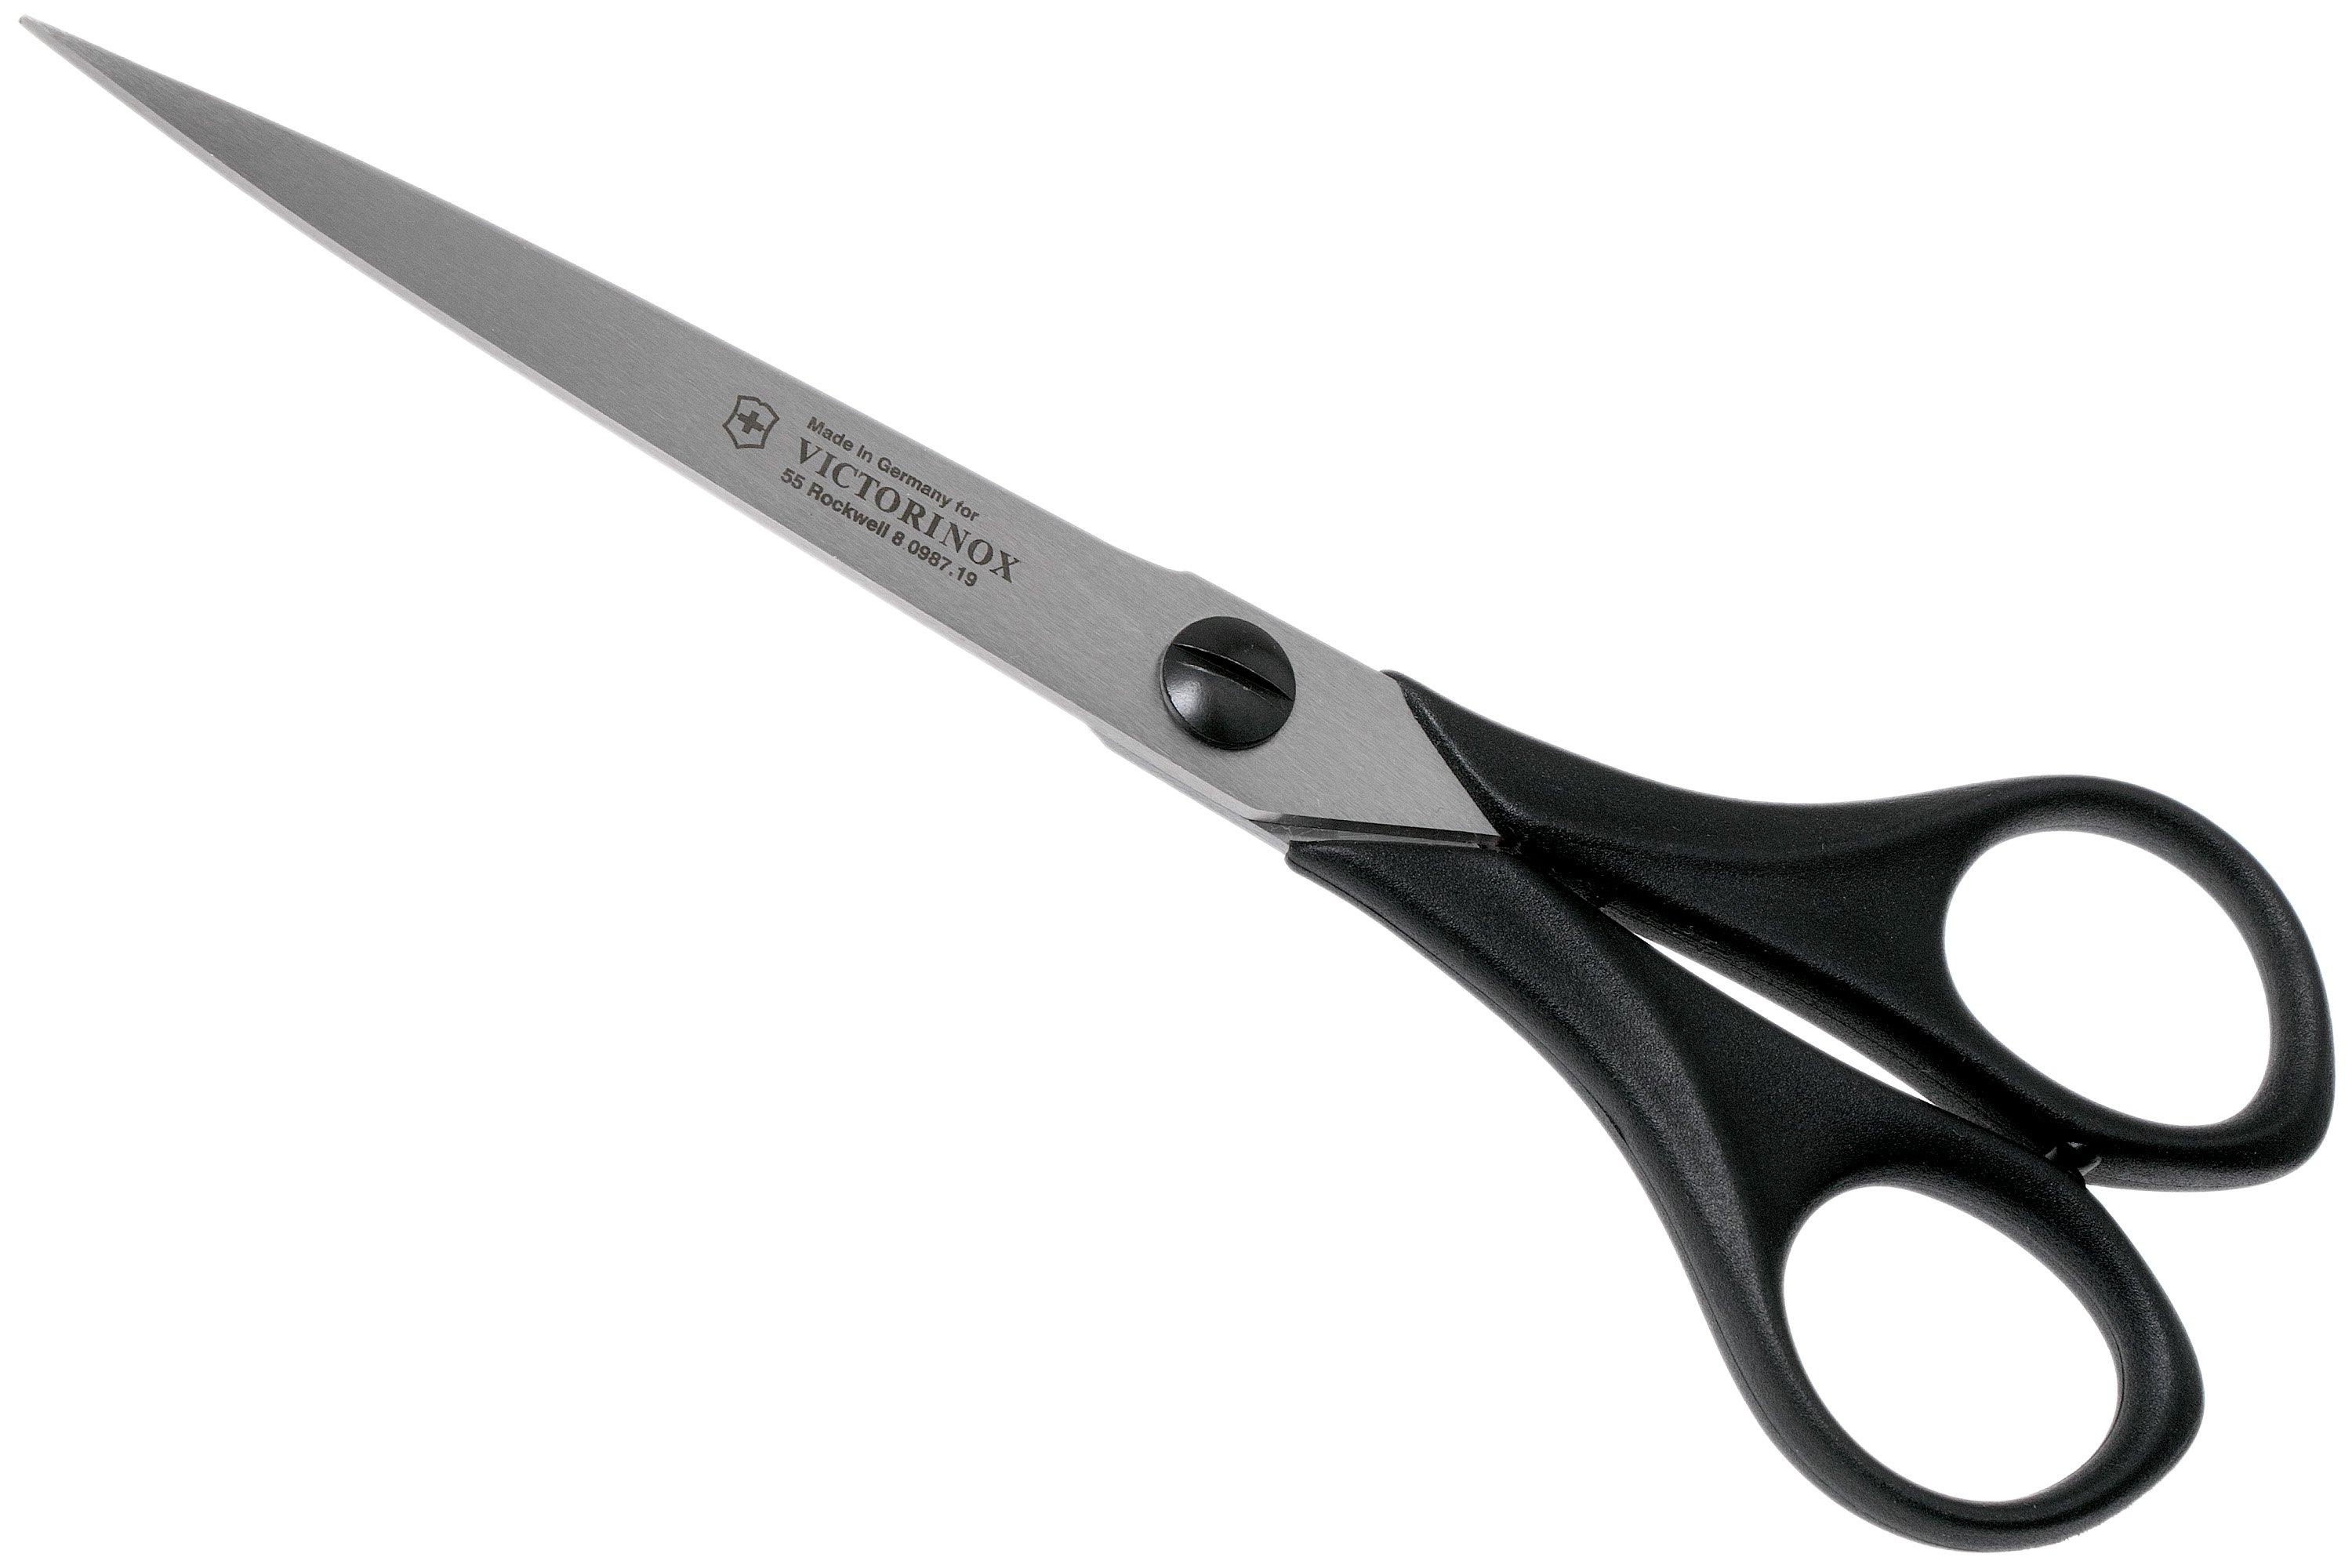 Victorinox 8.0987.19 household scissors shopping at 18 cm Advantageously 